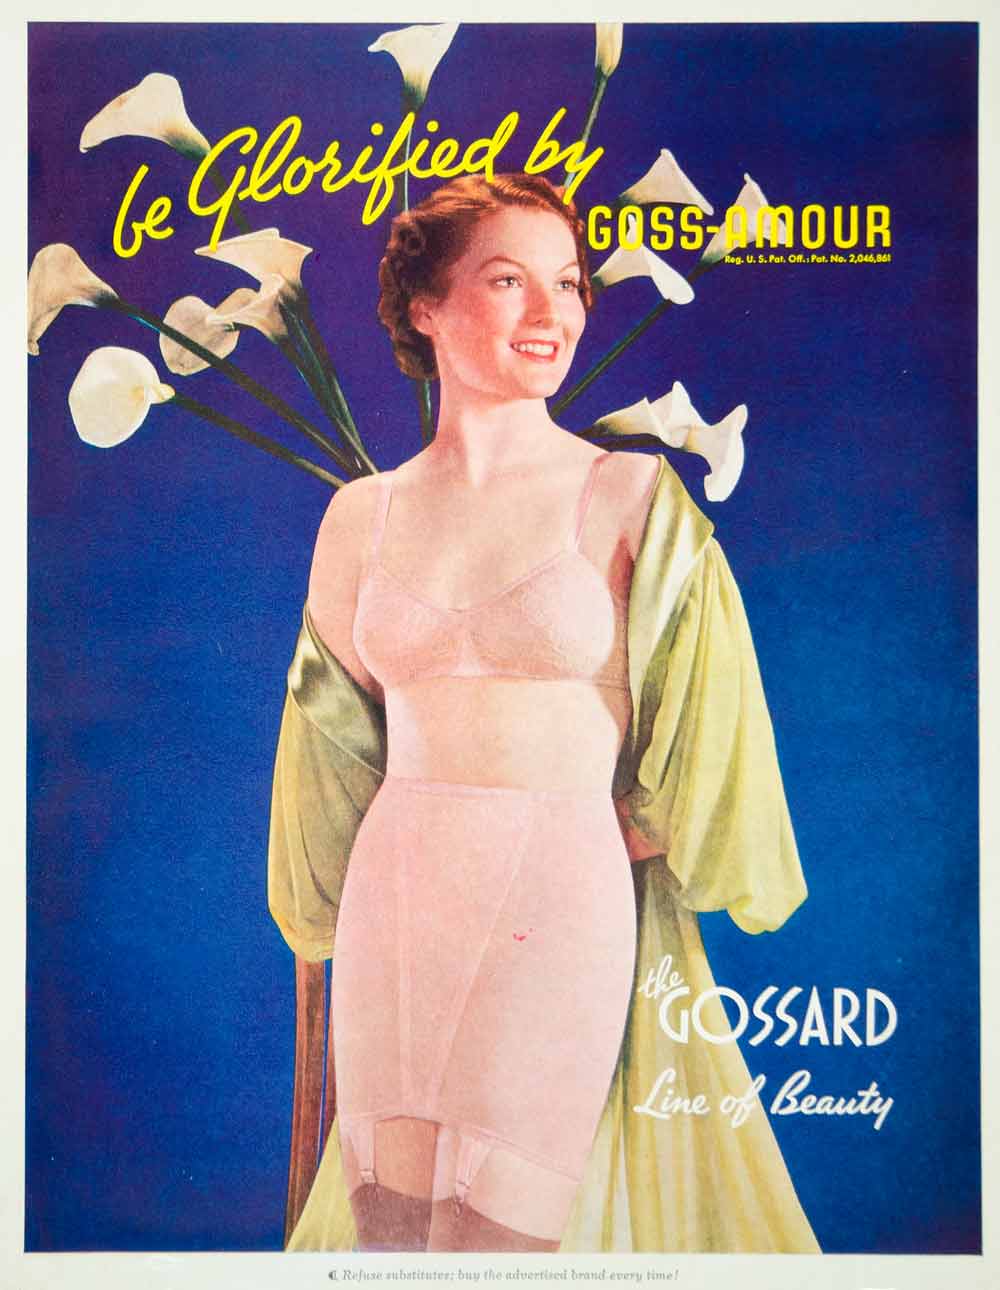 1937 Ad Vintage Gossard Lingerie Bra Girdle Corset Goss-Amour Fashion 1930's